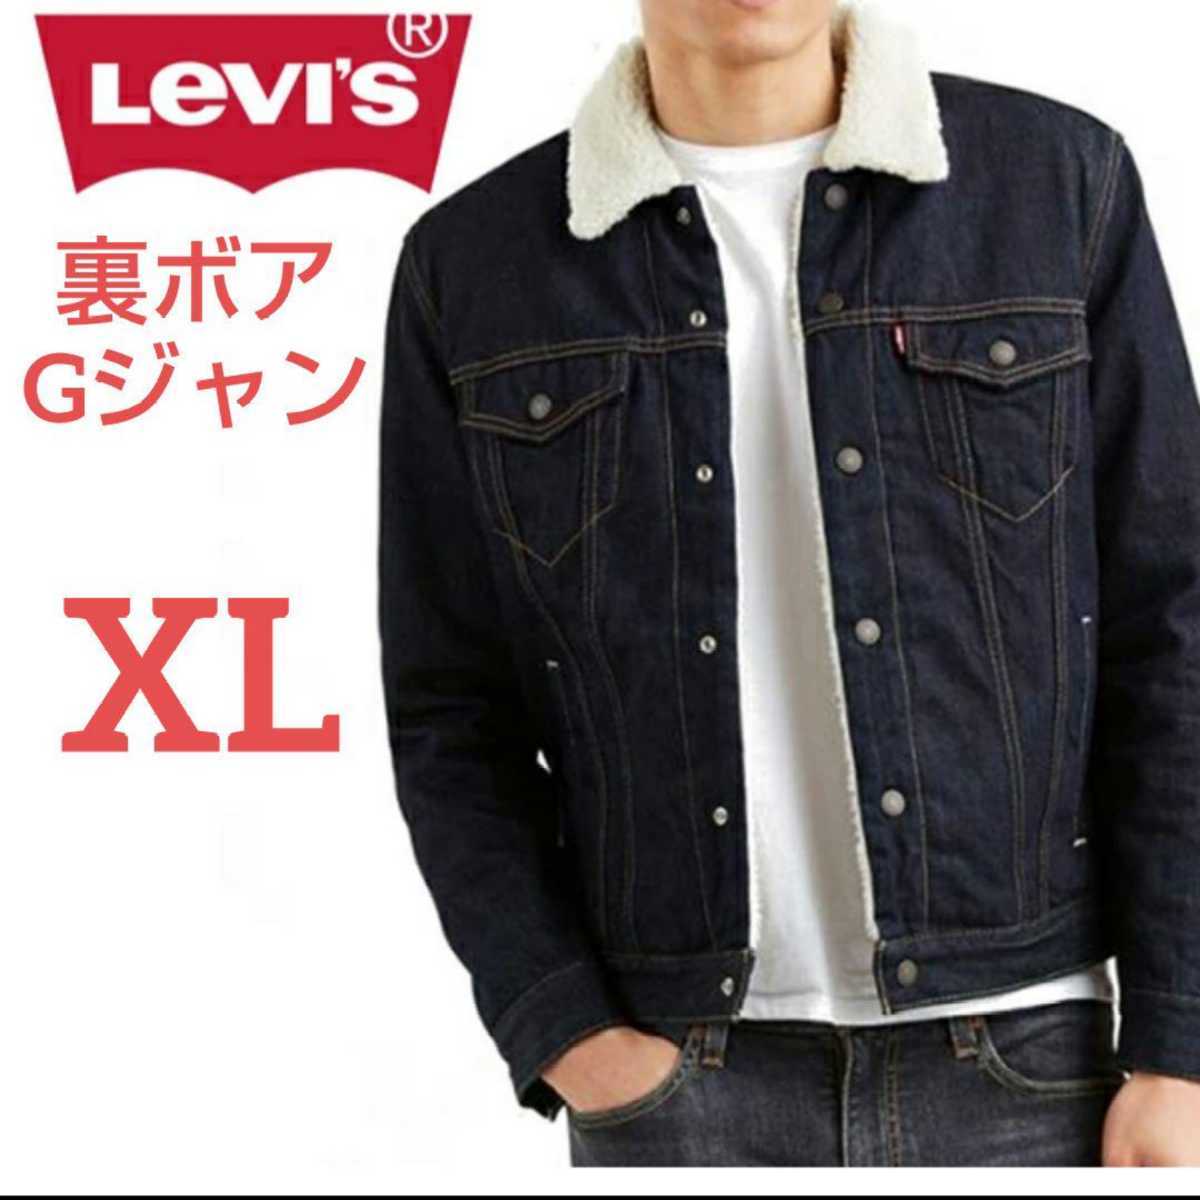 XL Levi's リーバイス Gジャン 裏ボア デニム シェルパ ジャケット 